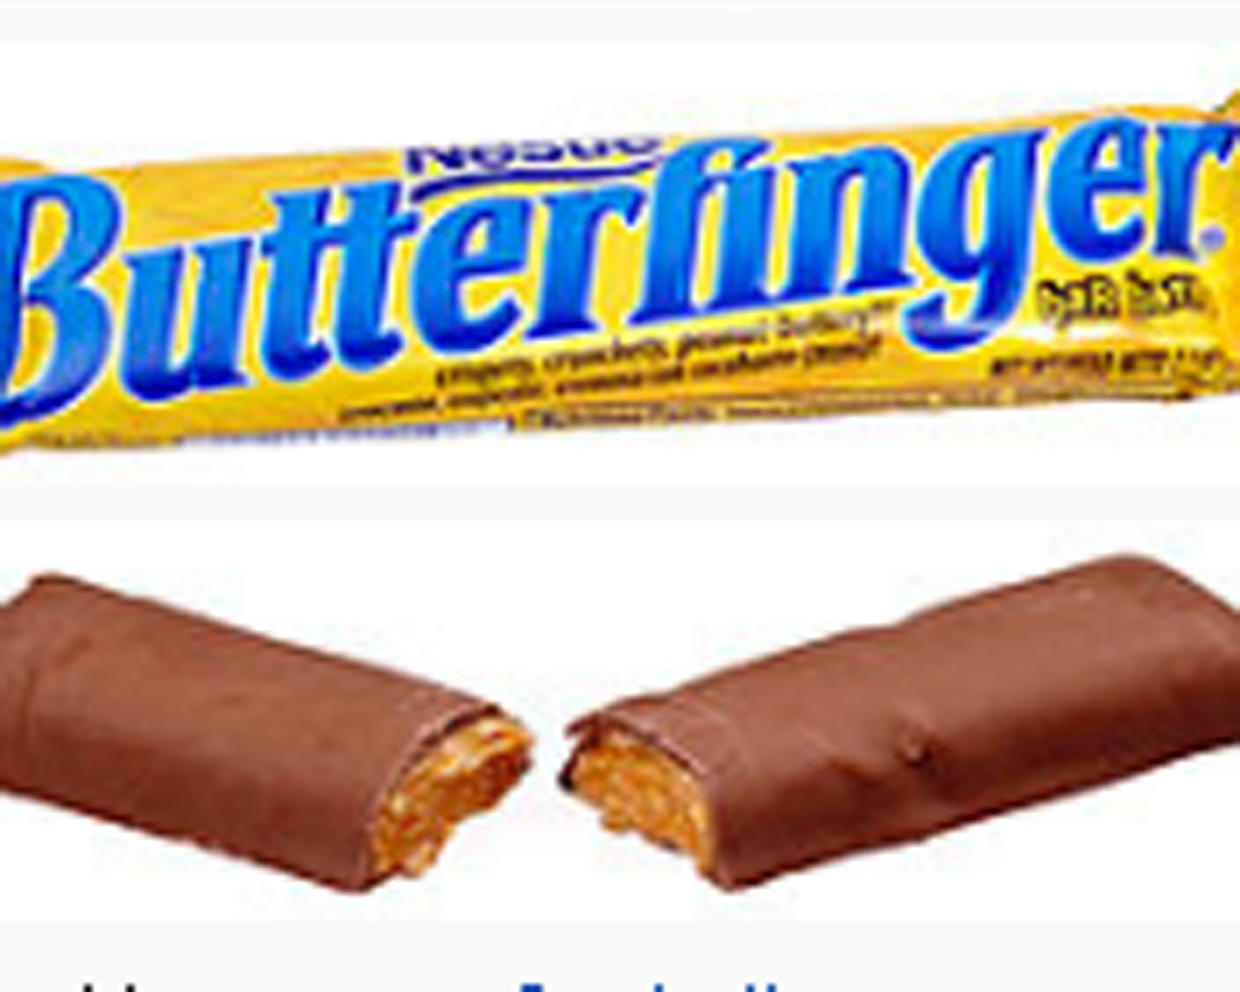 "Butterfinger Burglars": Candy bar trail ends in arrests - CBS News